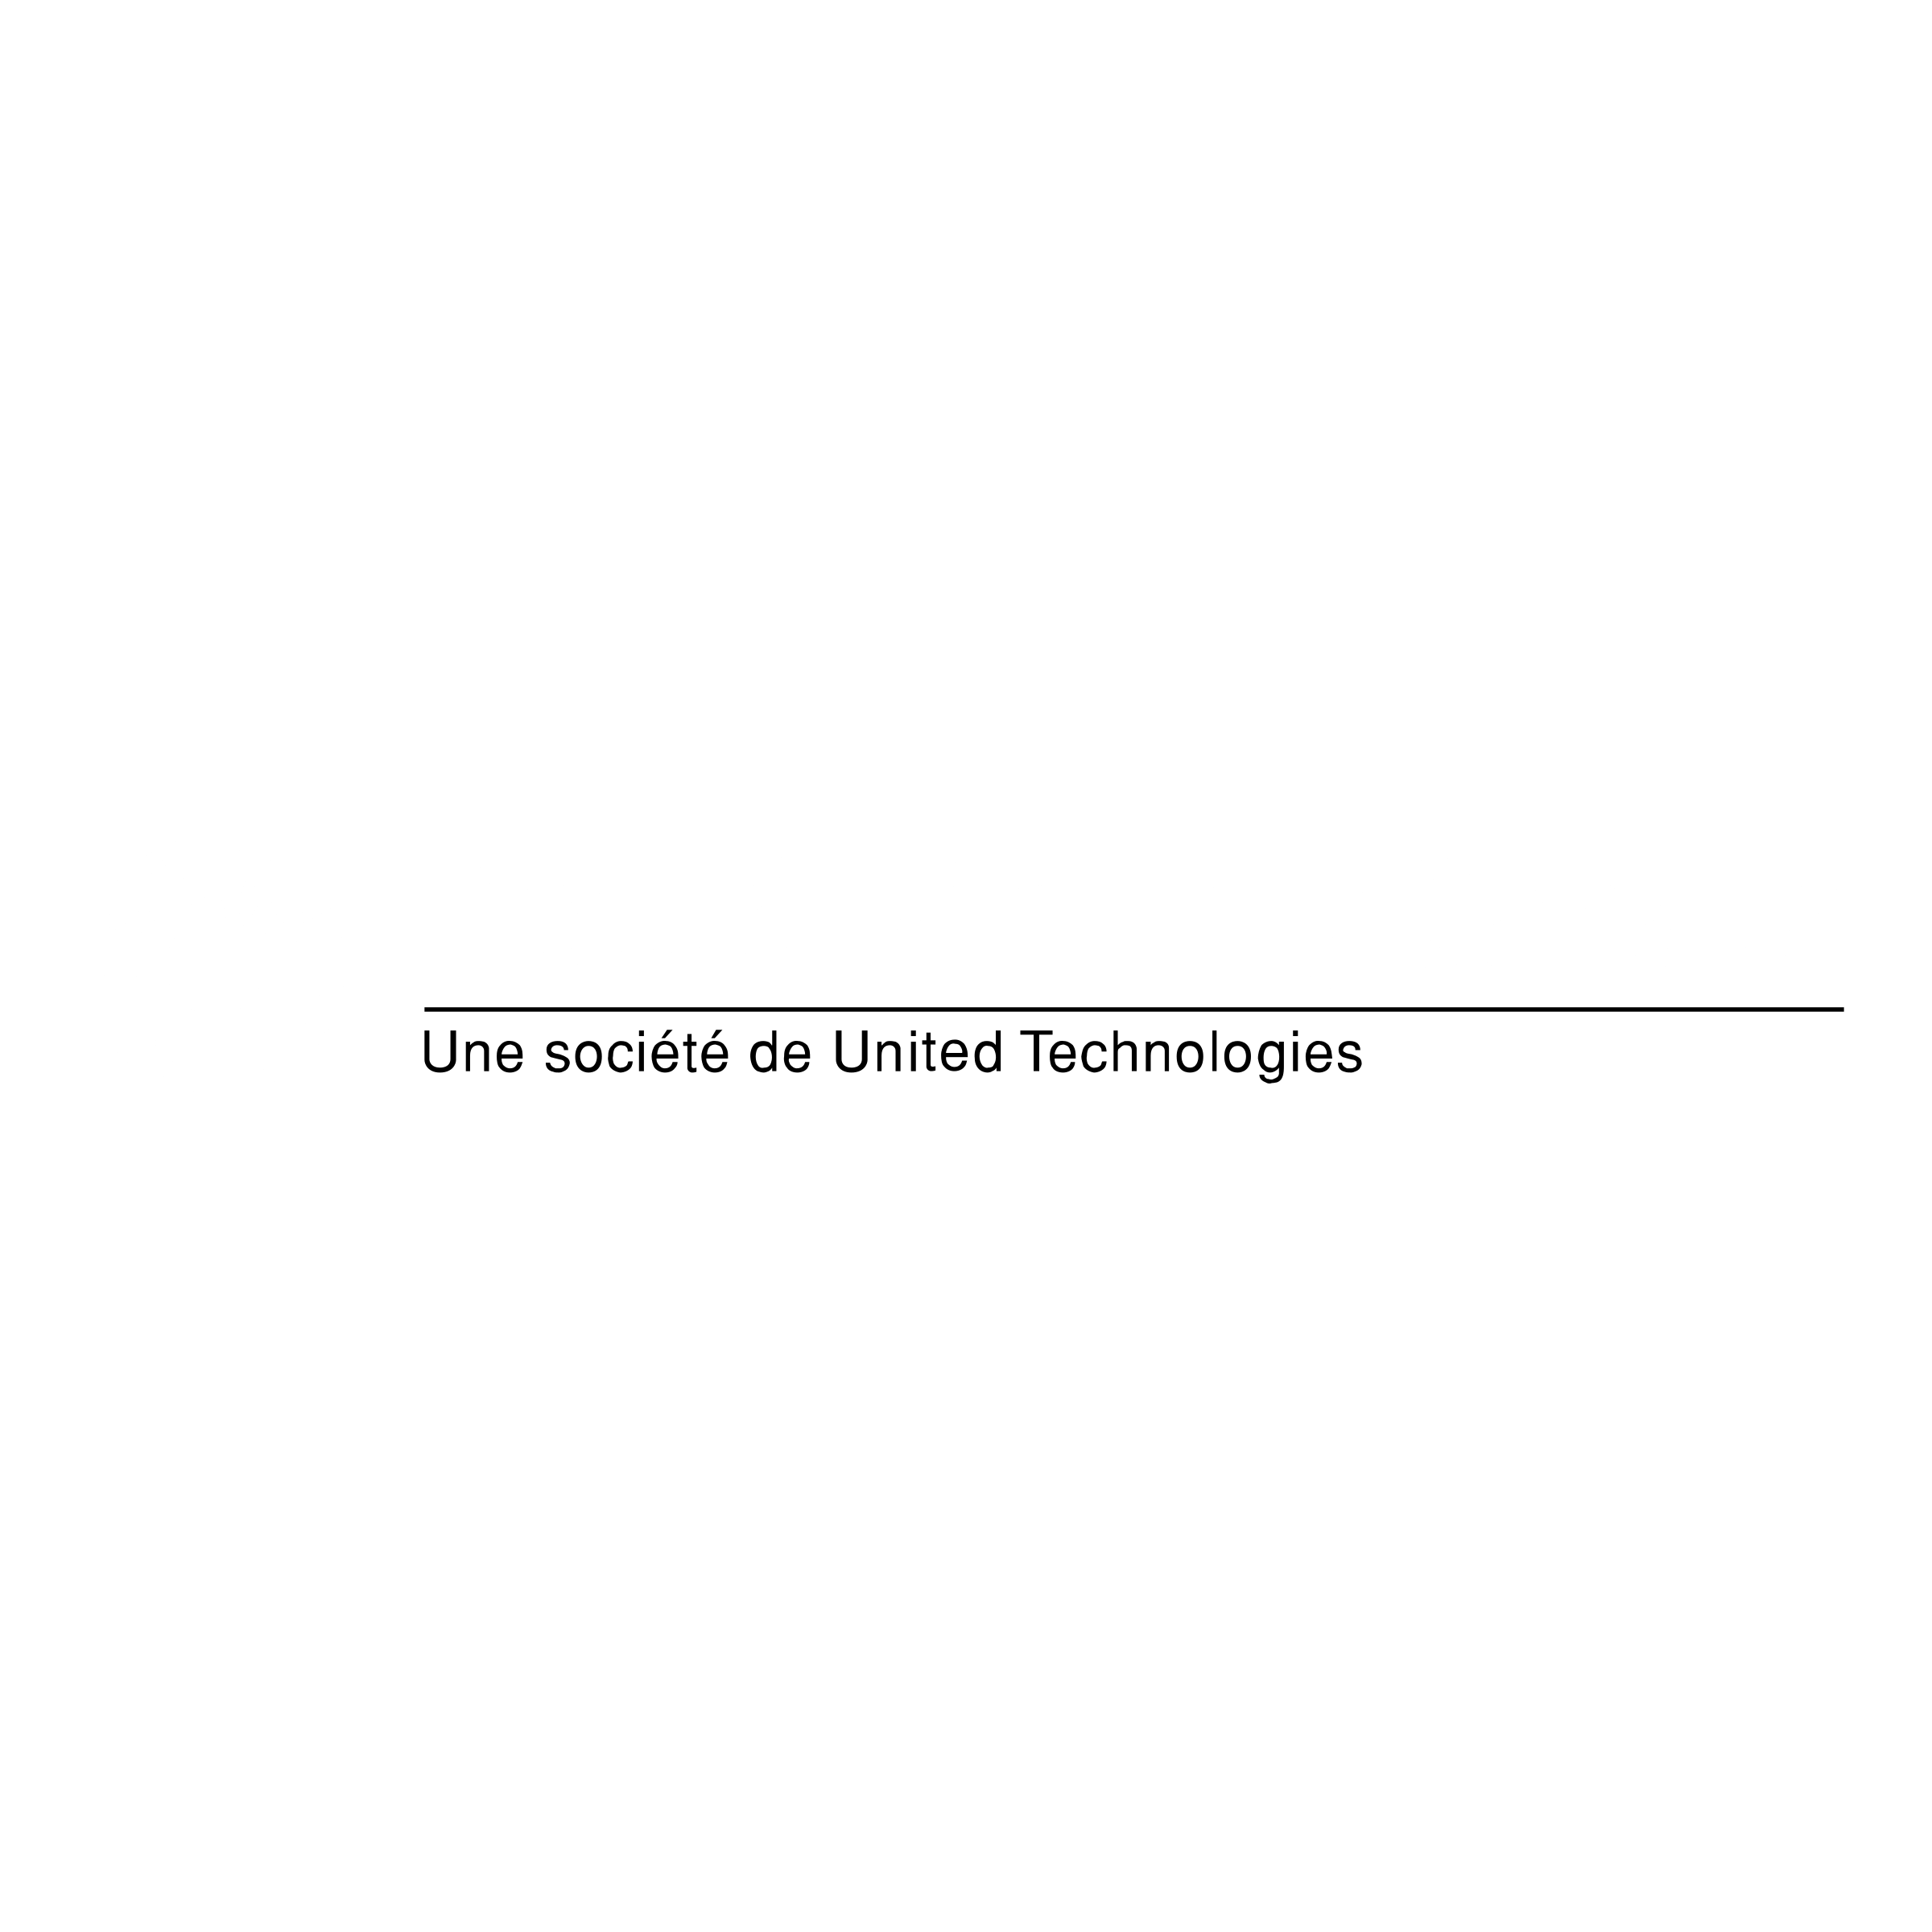 Pratt and Whitney Canada Logo - Pratt & Whitney Canada Logo PNG Transparent & SVG Vector - Freebie ...